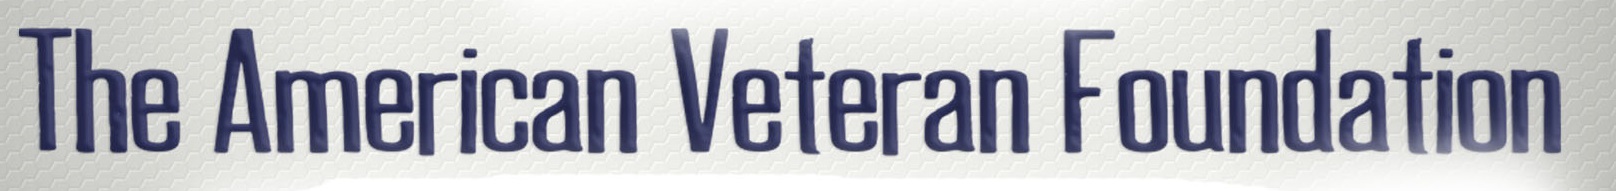 The American Veteran Foundation